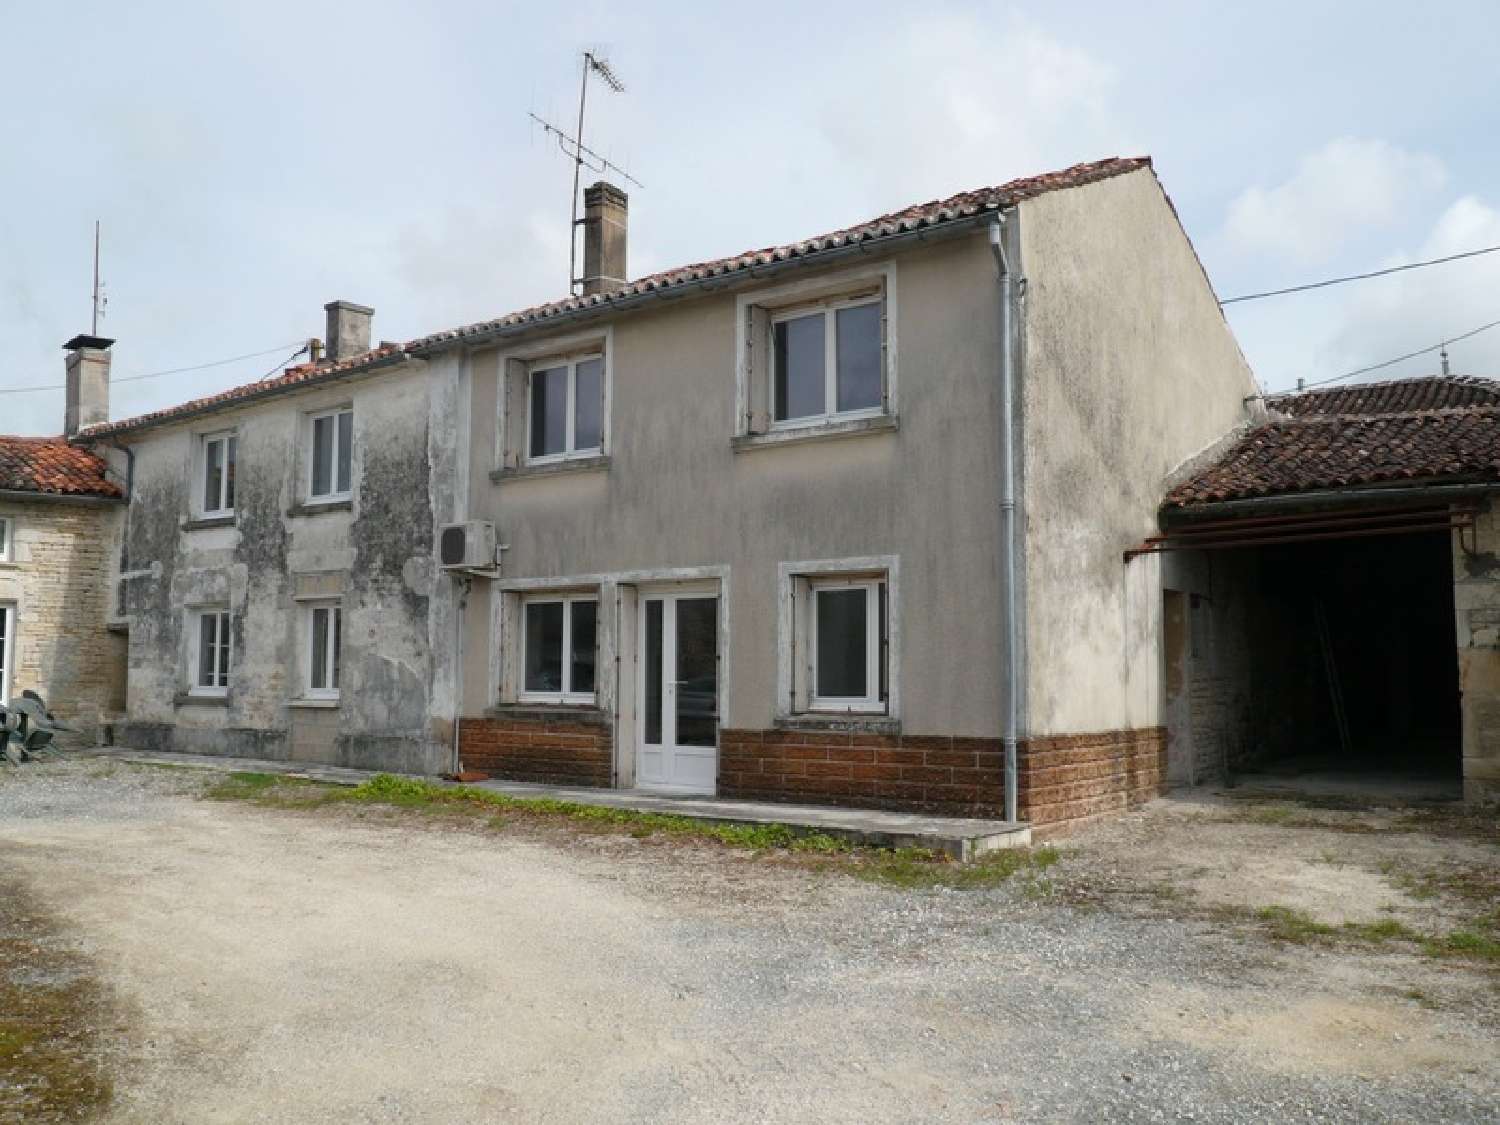  for sale village house Brie-sous-Matha Charente-Maritime 2